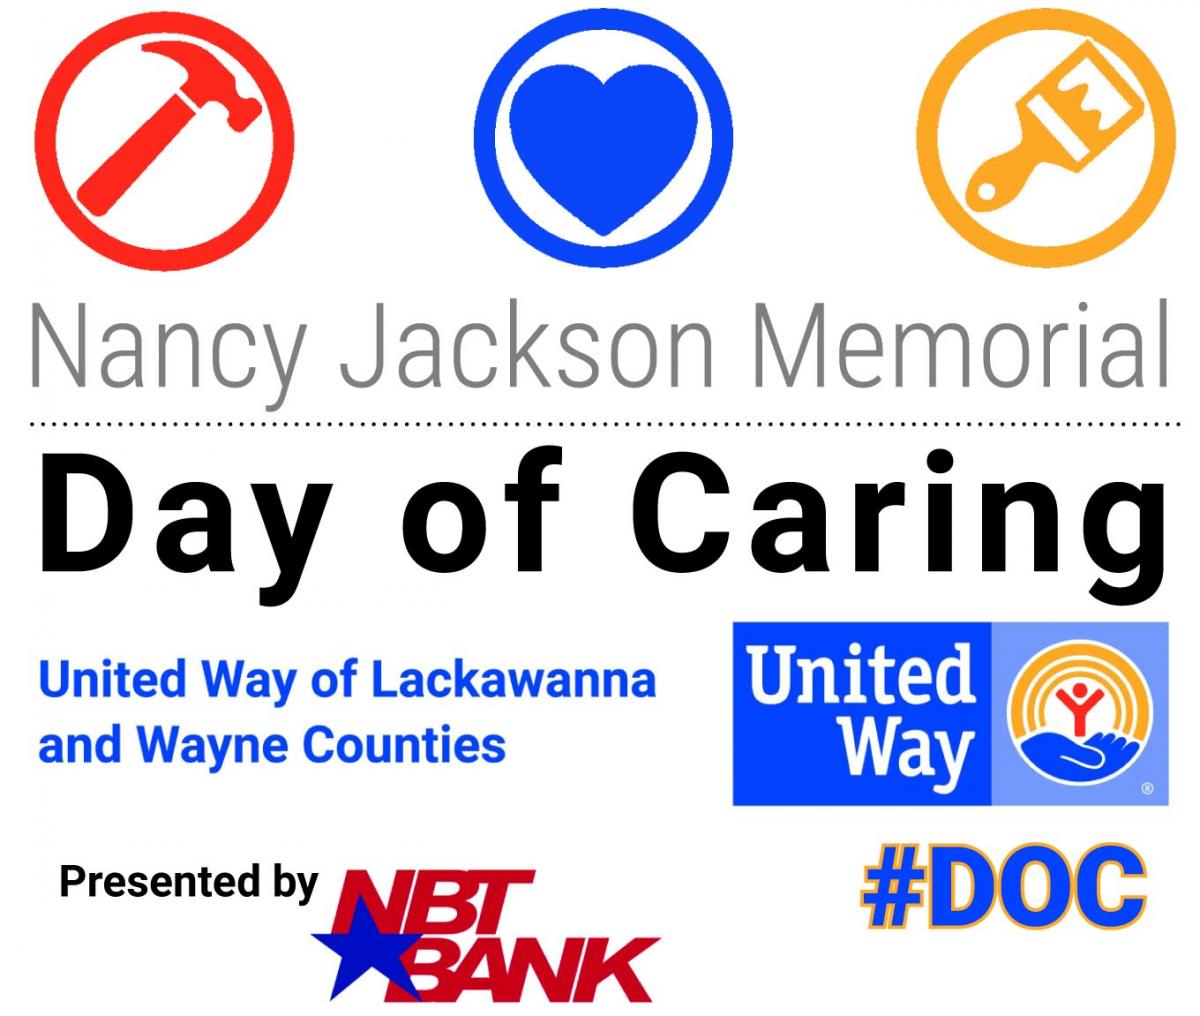 Nancy Jackson Memorial Day of Caring